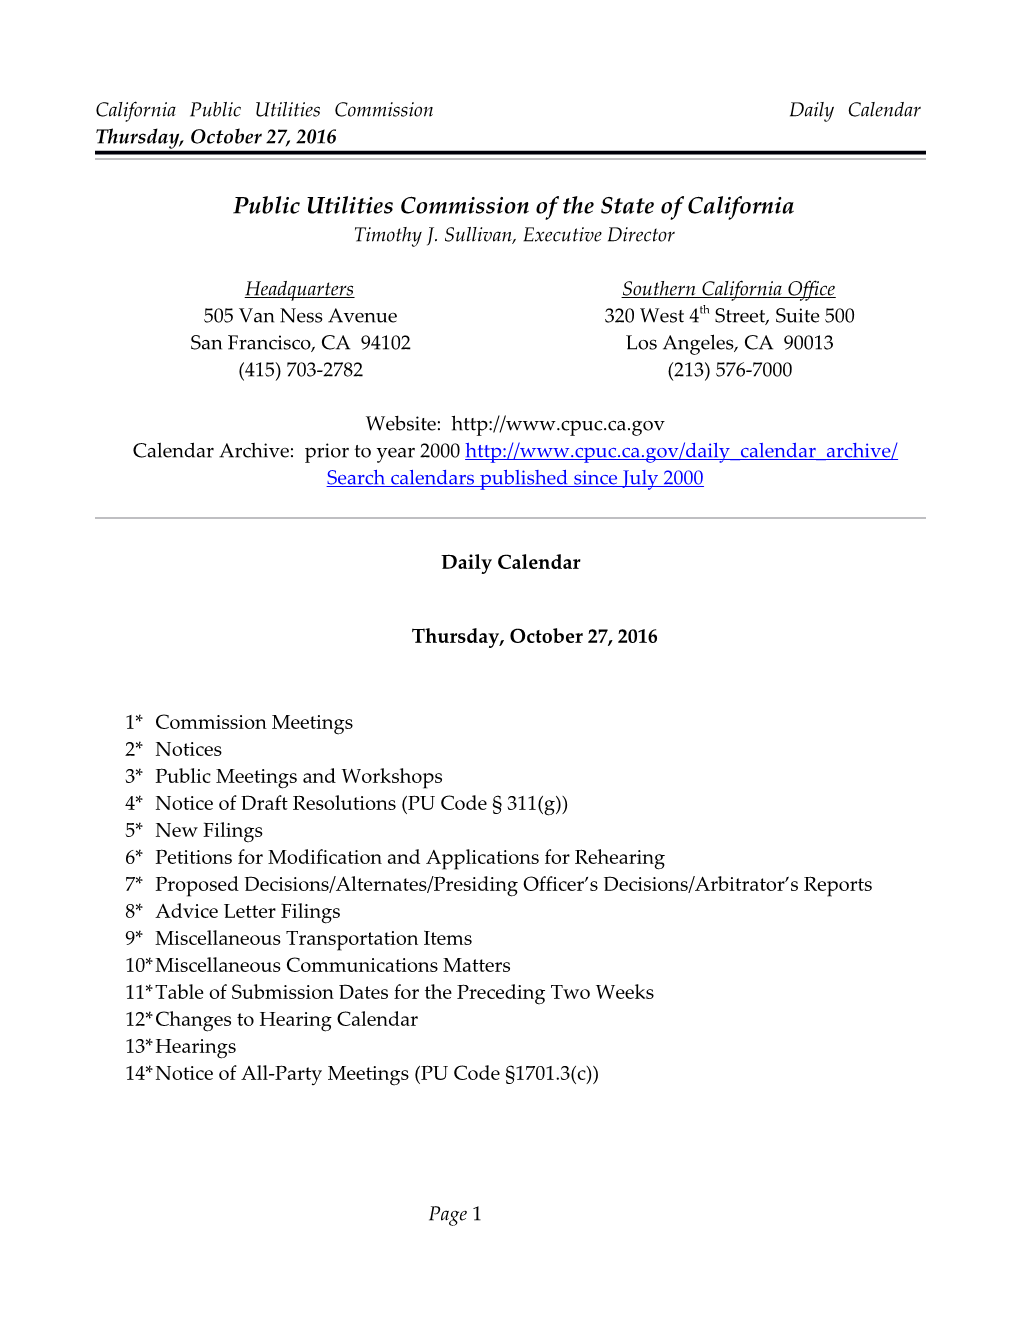 California Public Utilities Commission Daily Calendar Thursday, October 27, 2016